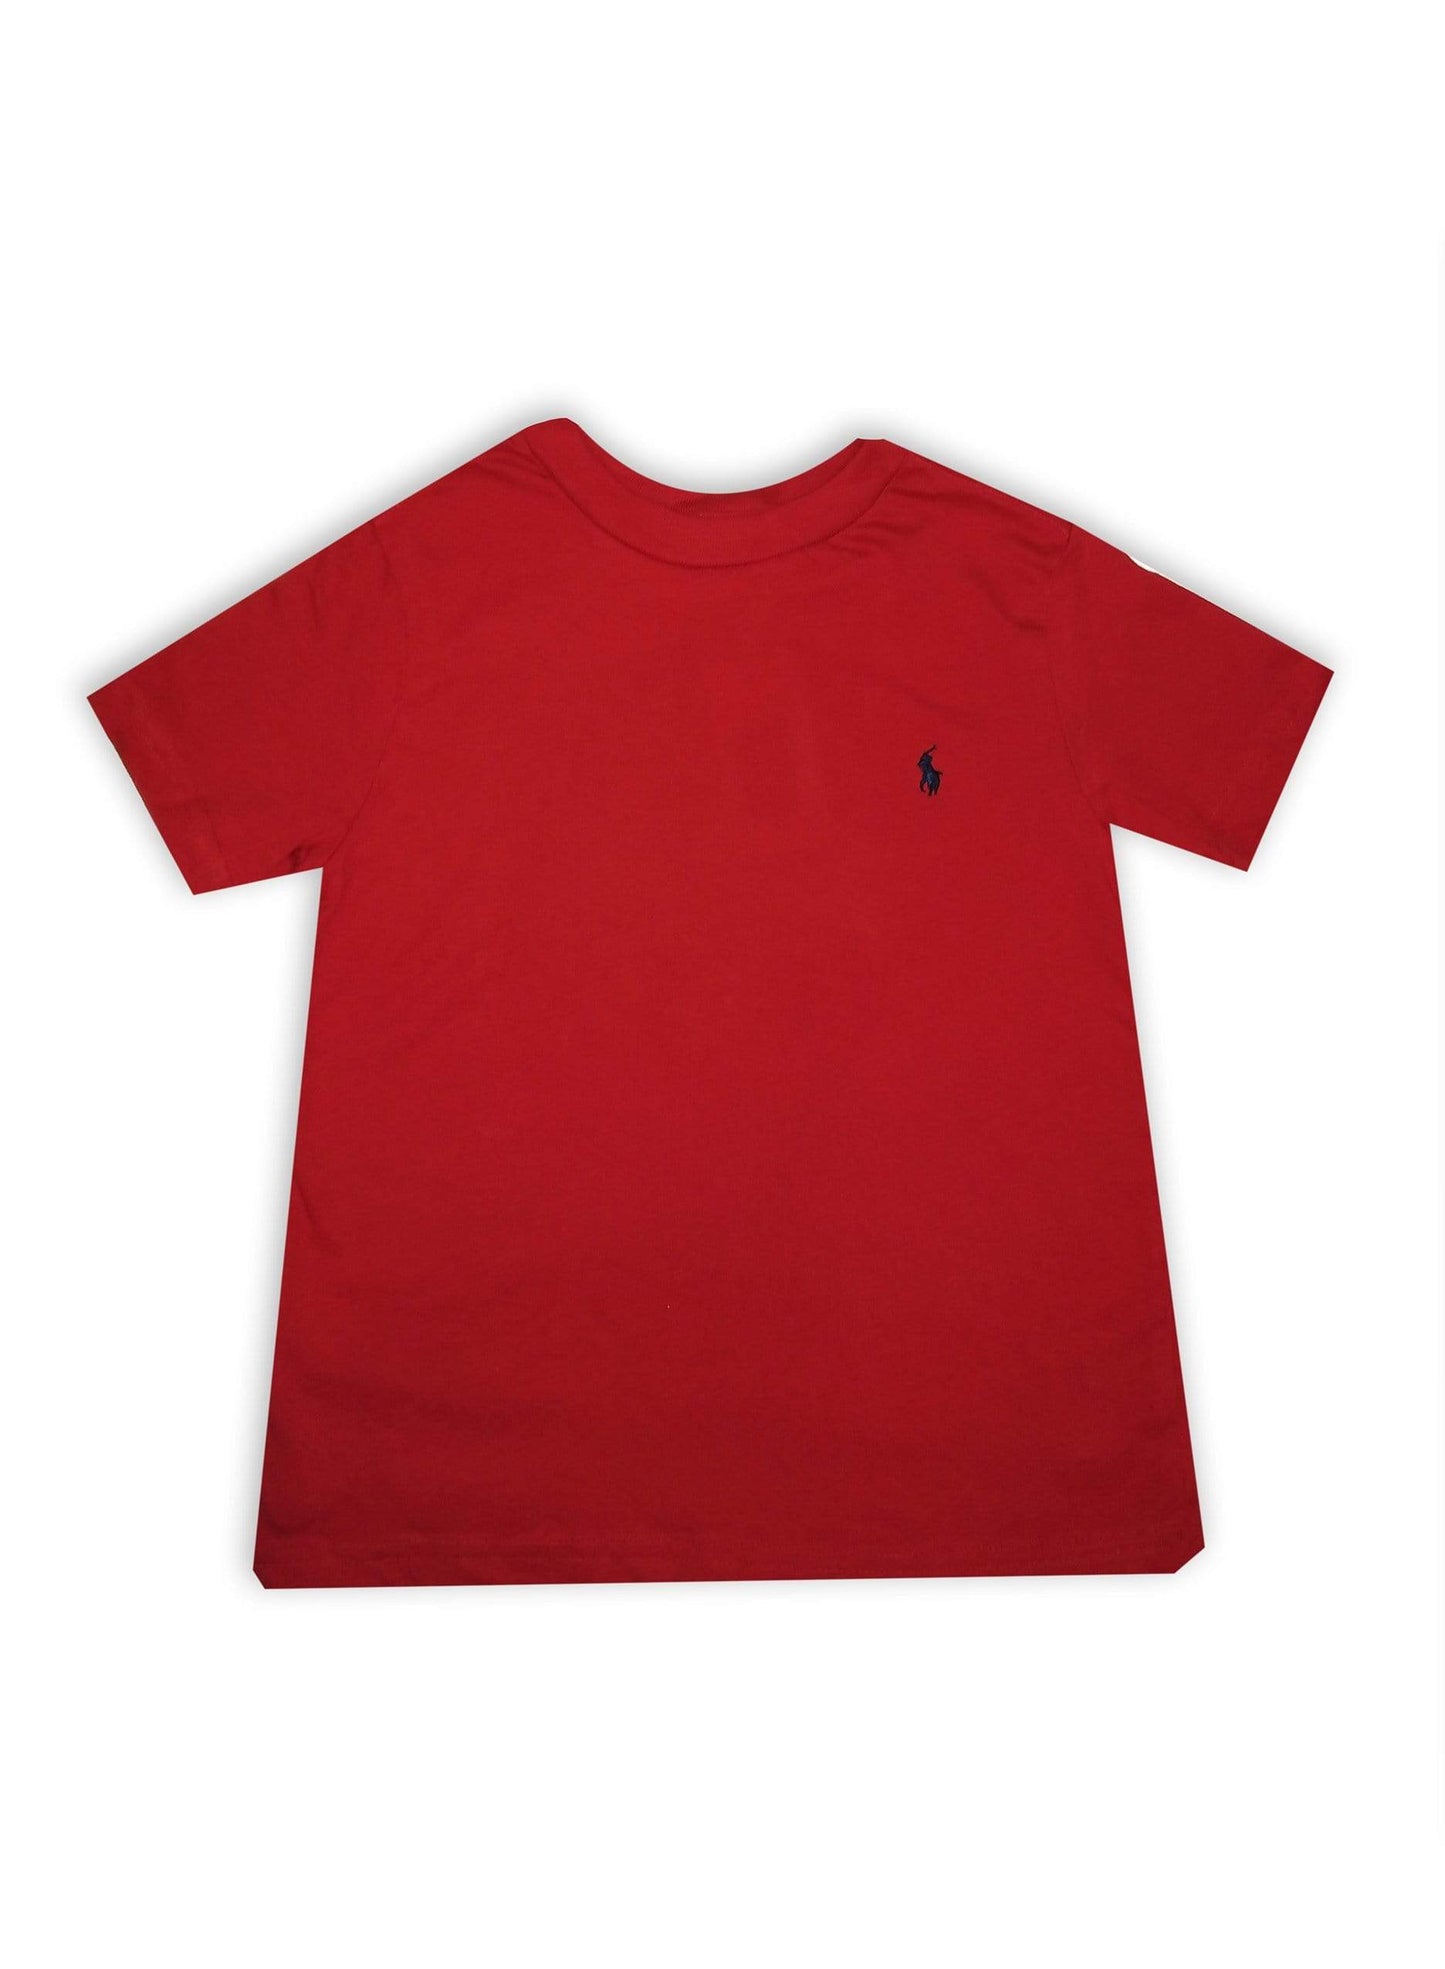 POLO RALPH LAUREN Apparel 4 Years / Red POLO RALPH LAUREN - Boys Red Classic T-Shirt